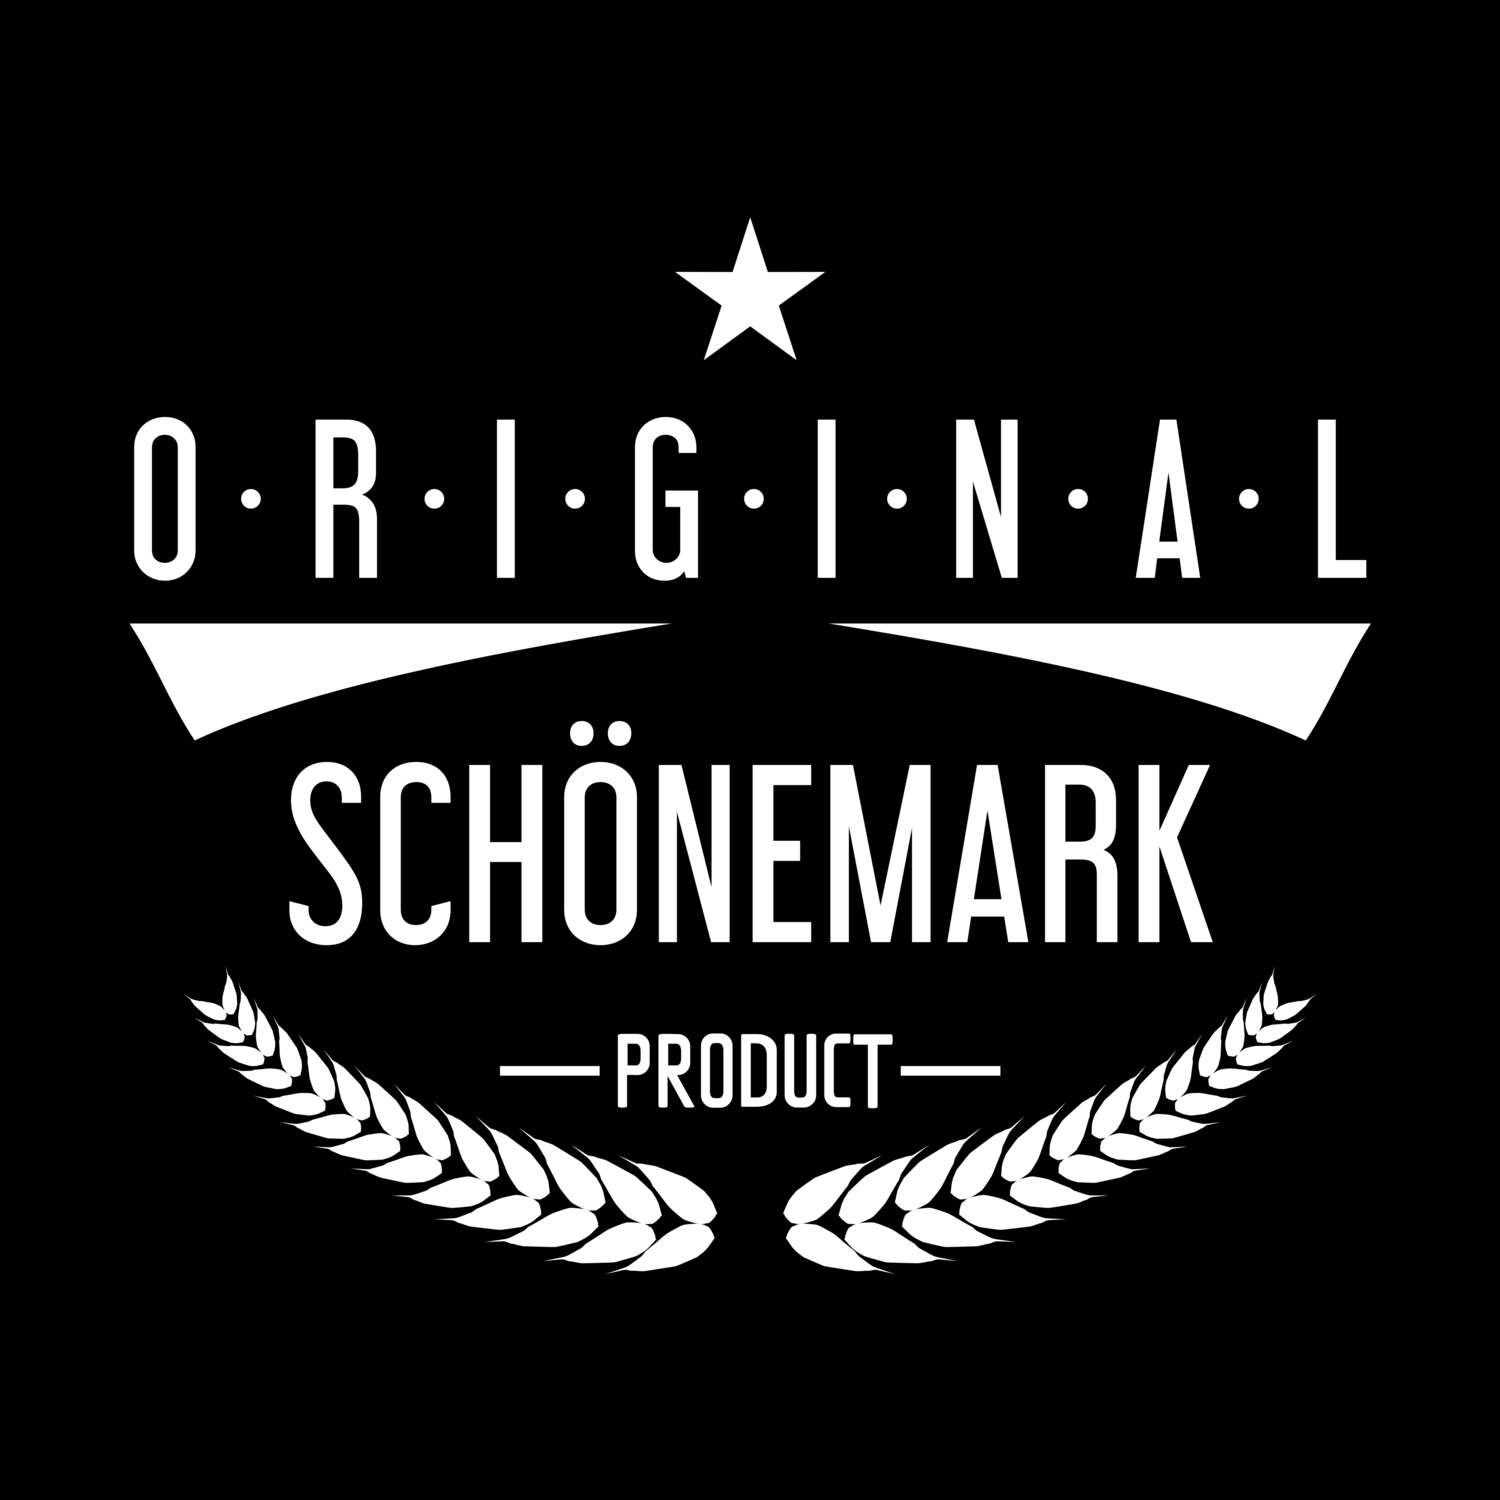 Schönemark T-Shirt »Original Product«